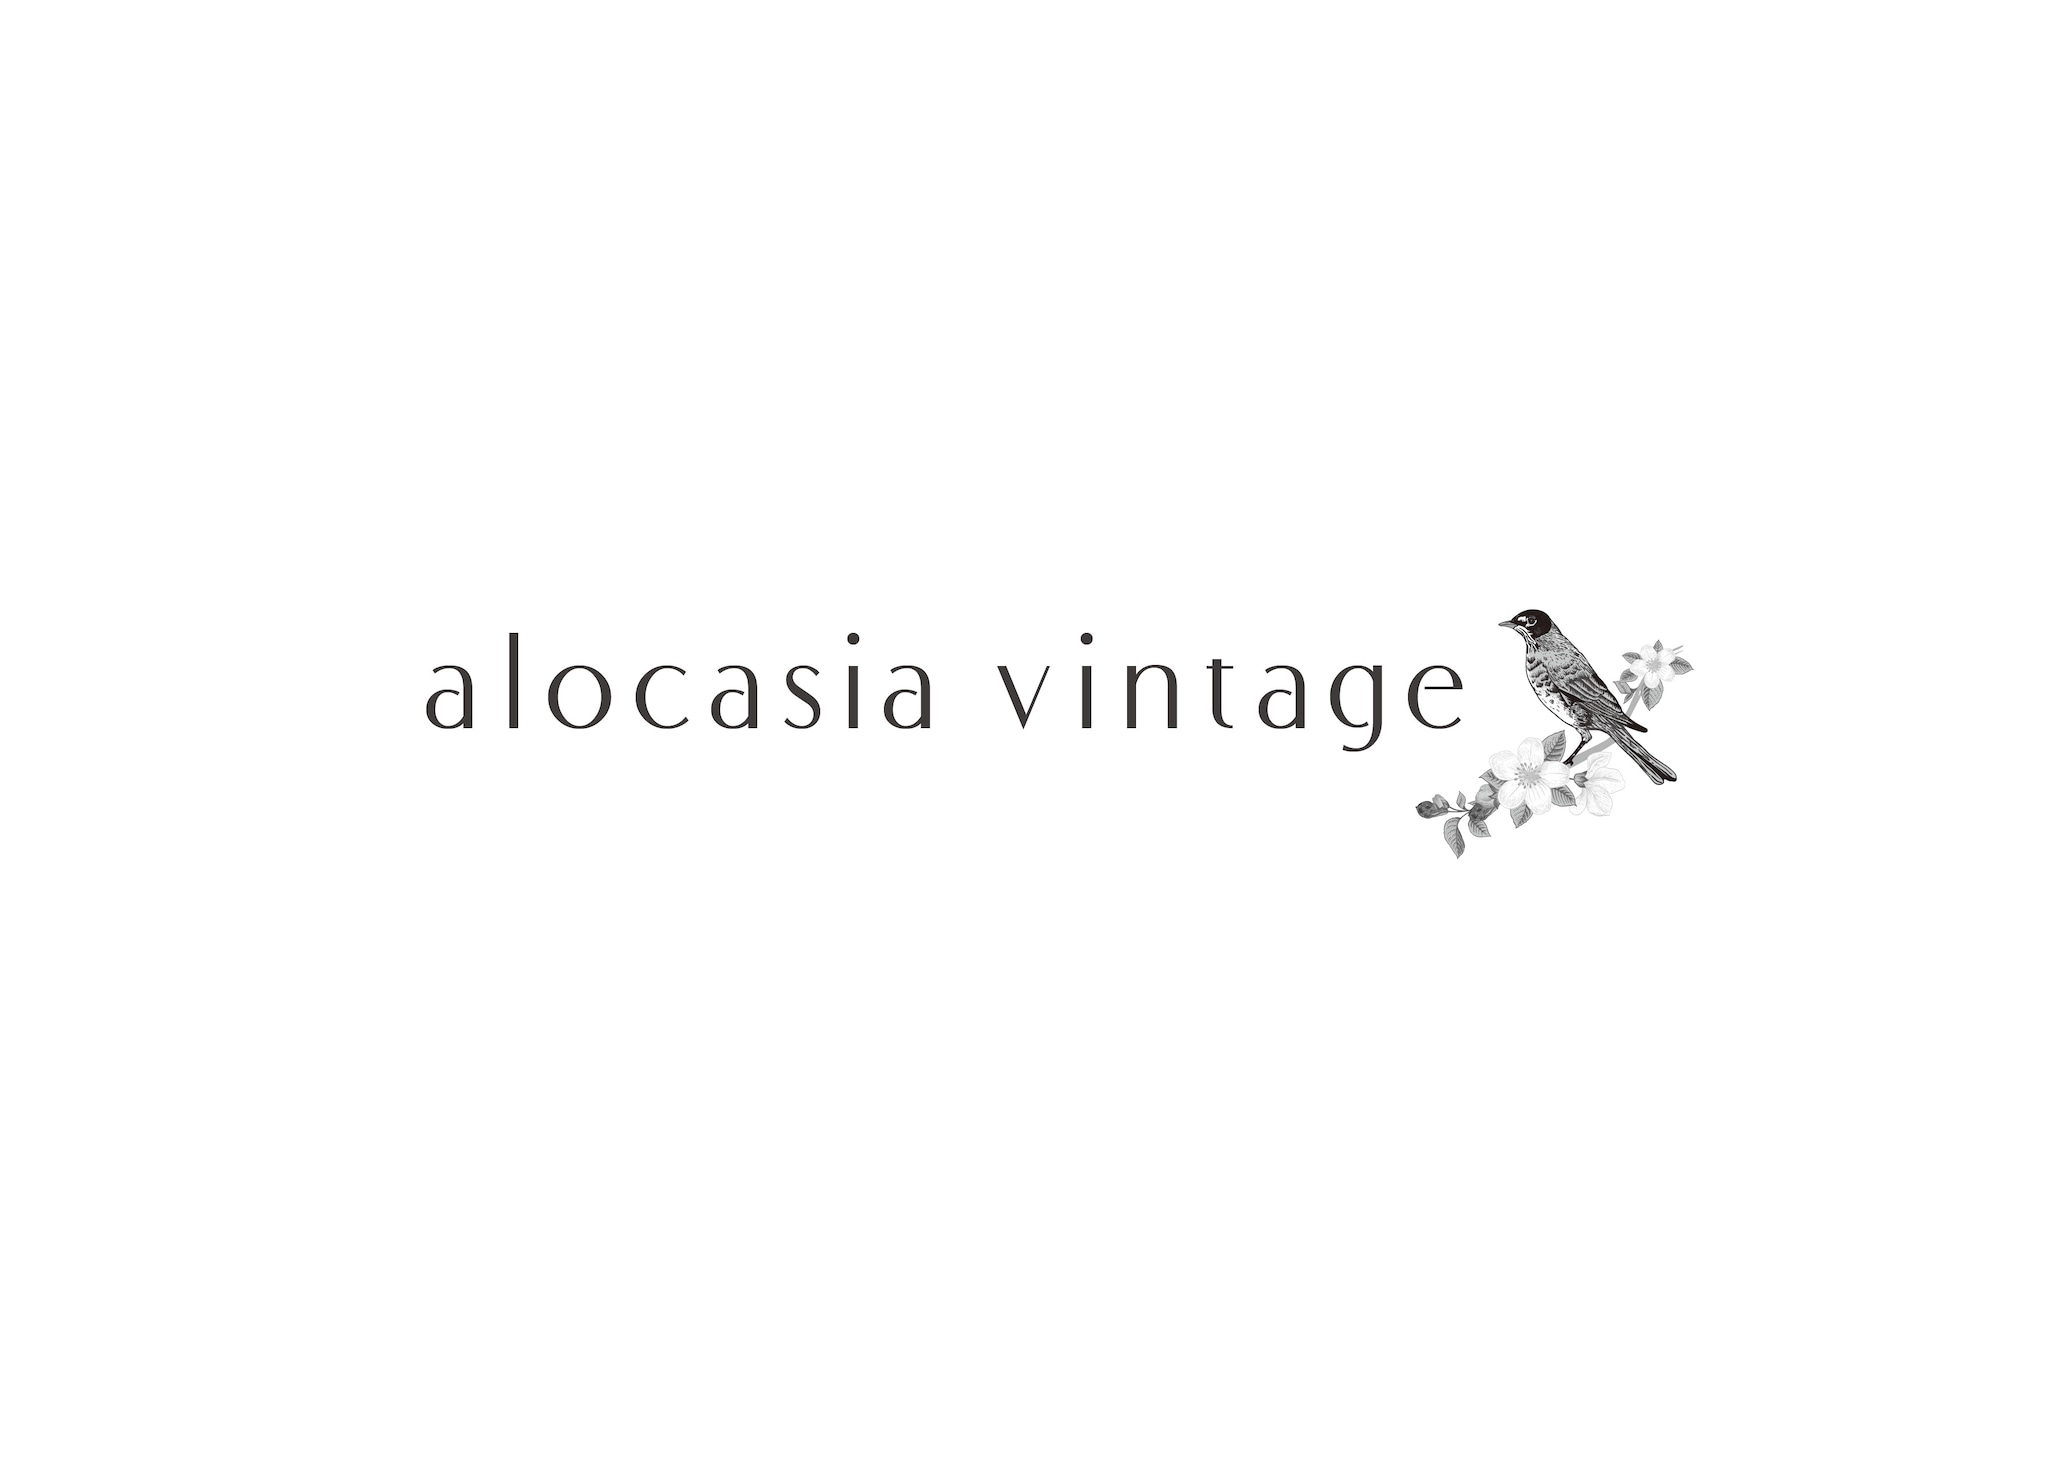 alocasia vintage